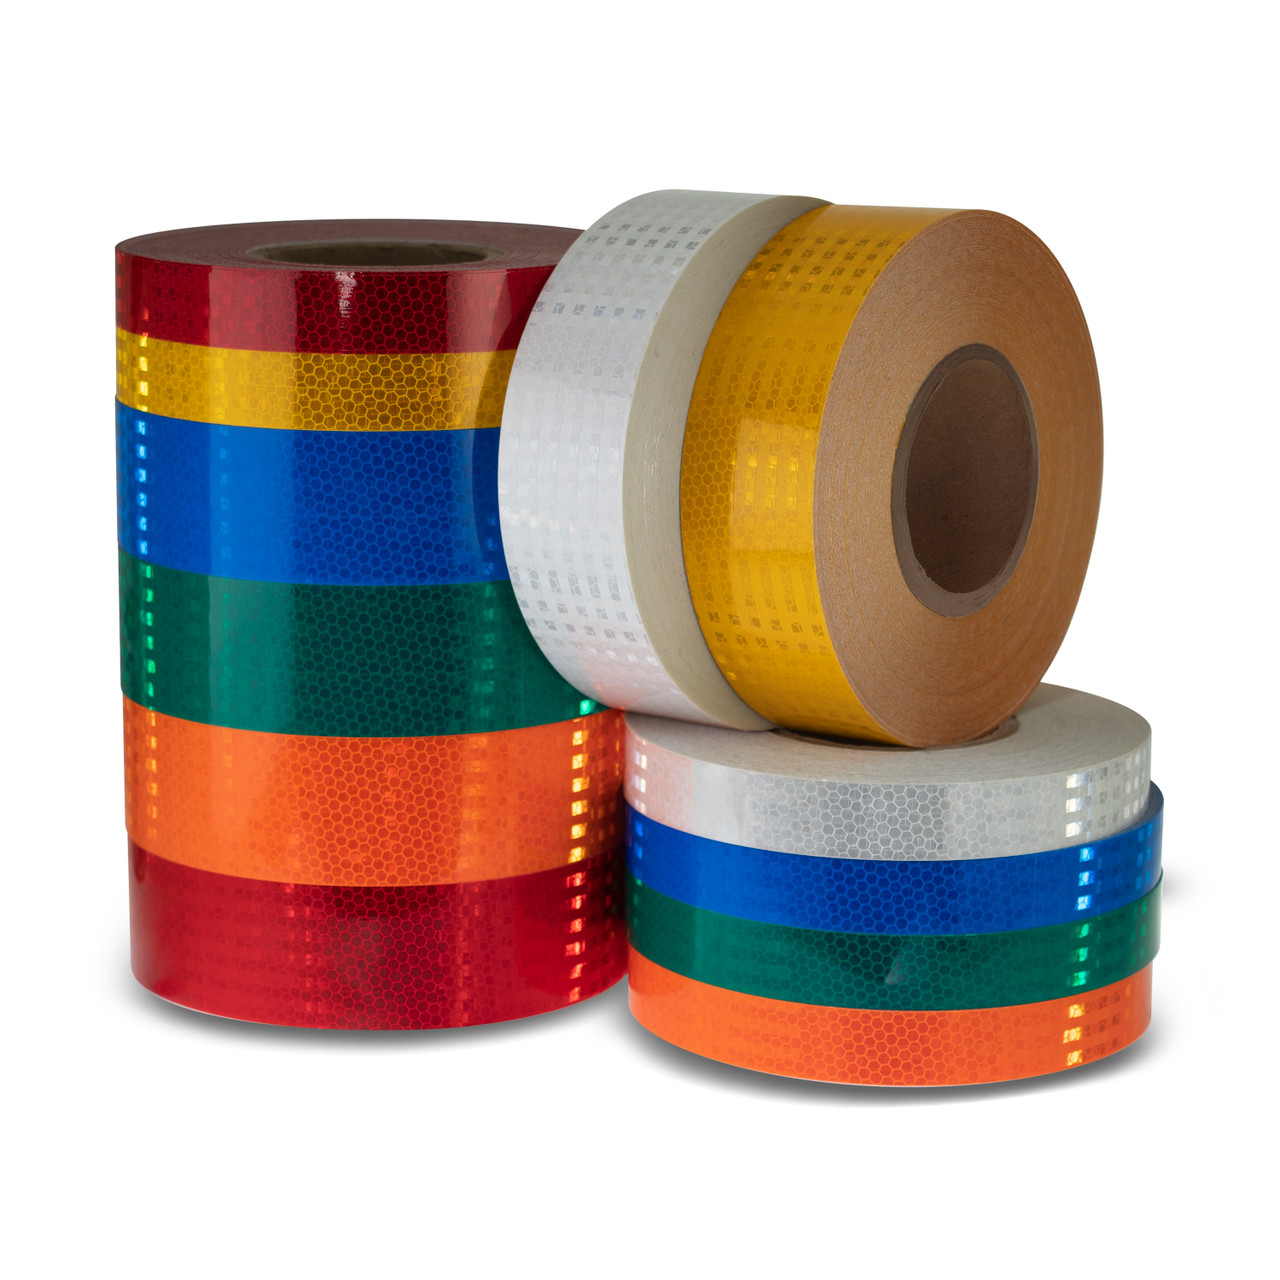 10 Household Uses for Velcro Tape - Tape Jungle